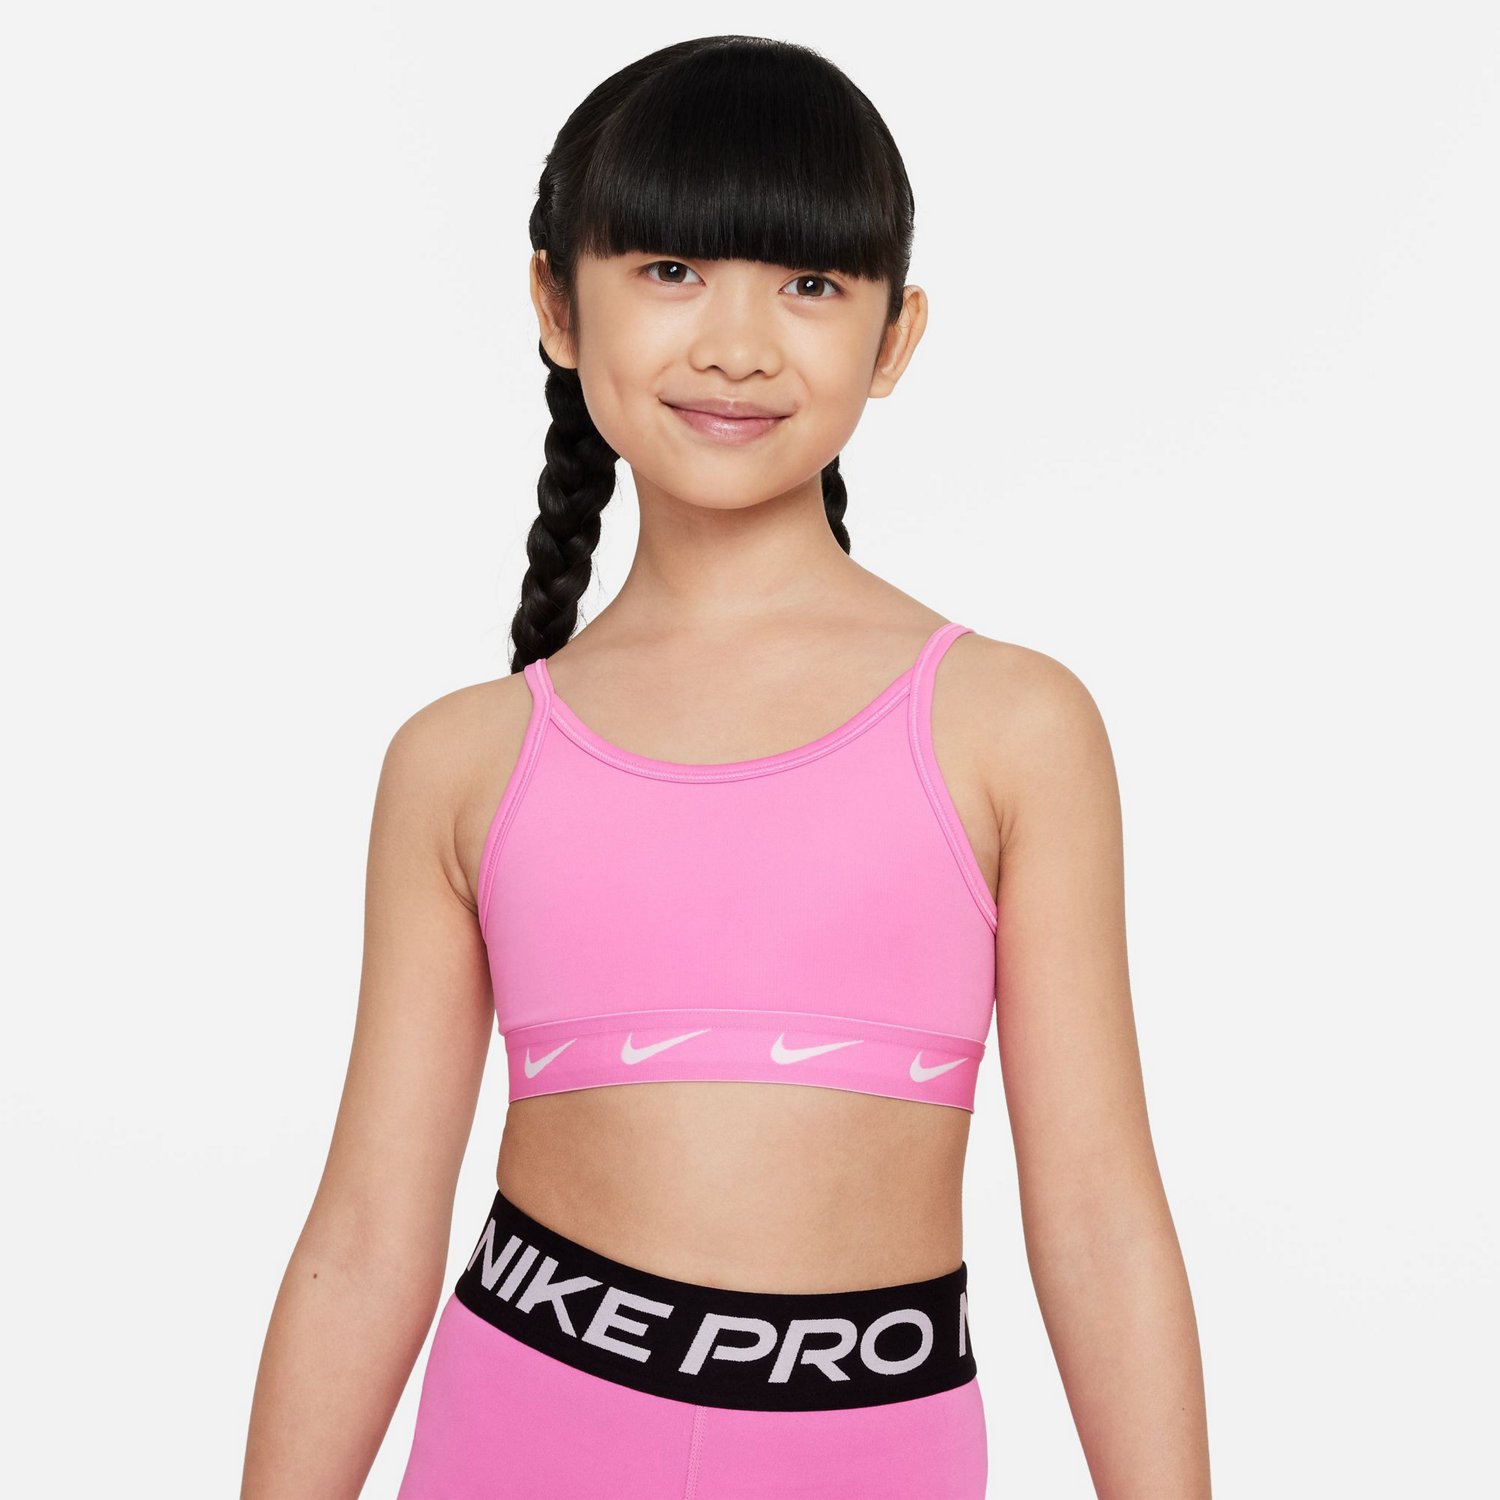 Nike Pro Sports Bra - Girls - Black/White - Youth Small 